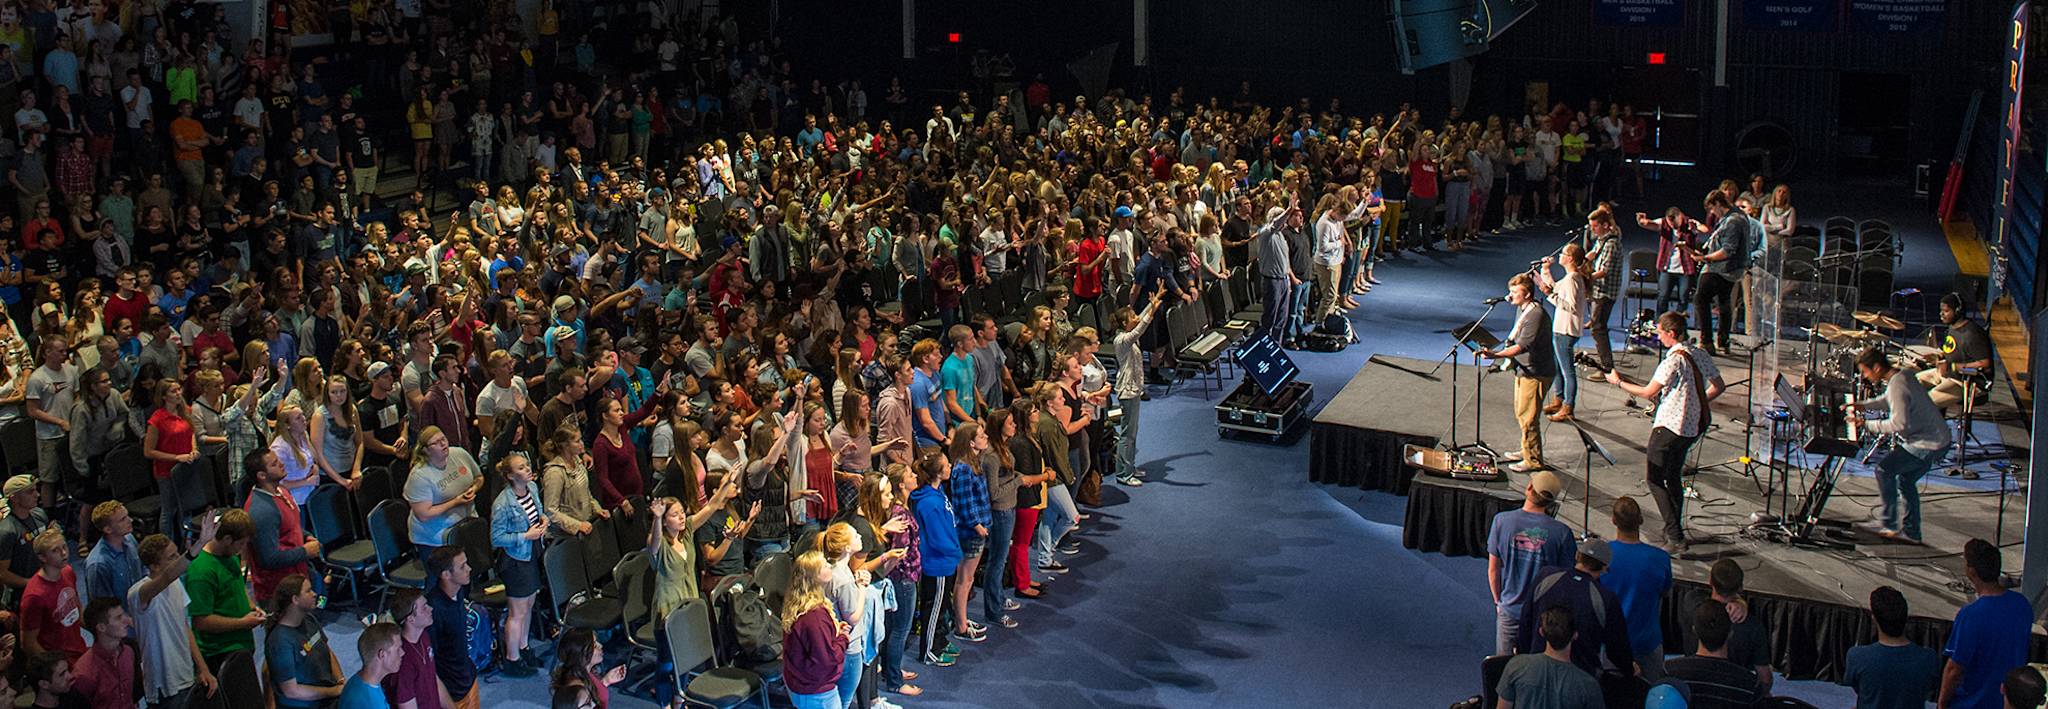 Colorado Christian University students worshiping in chapel.